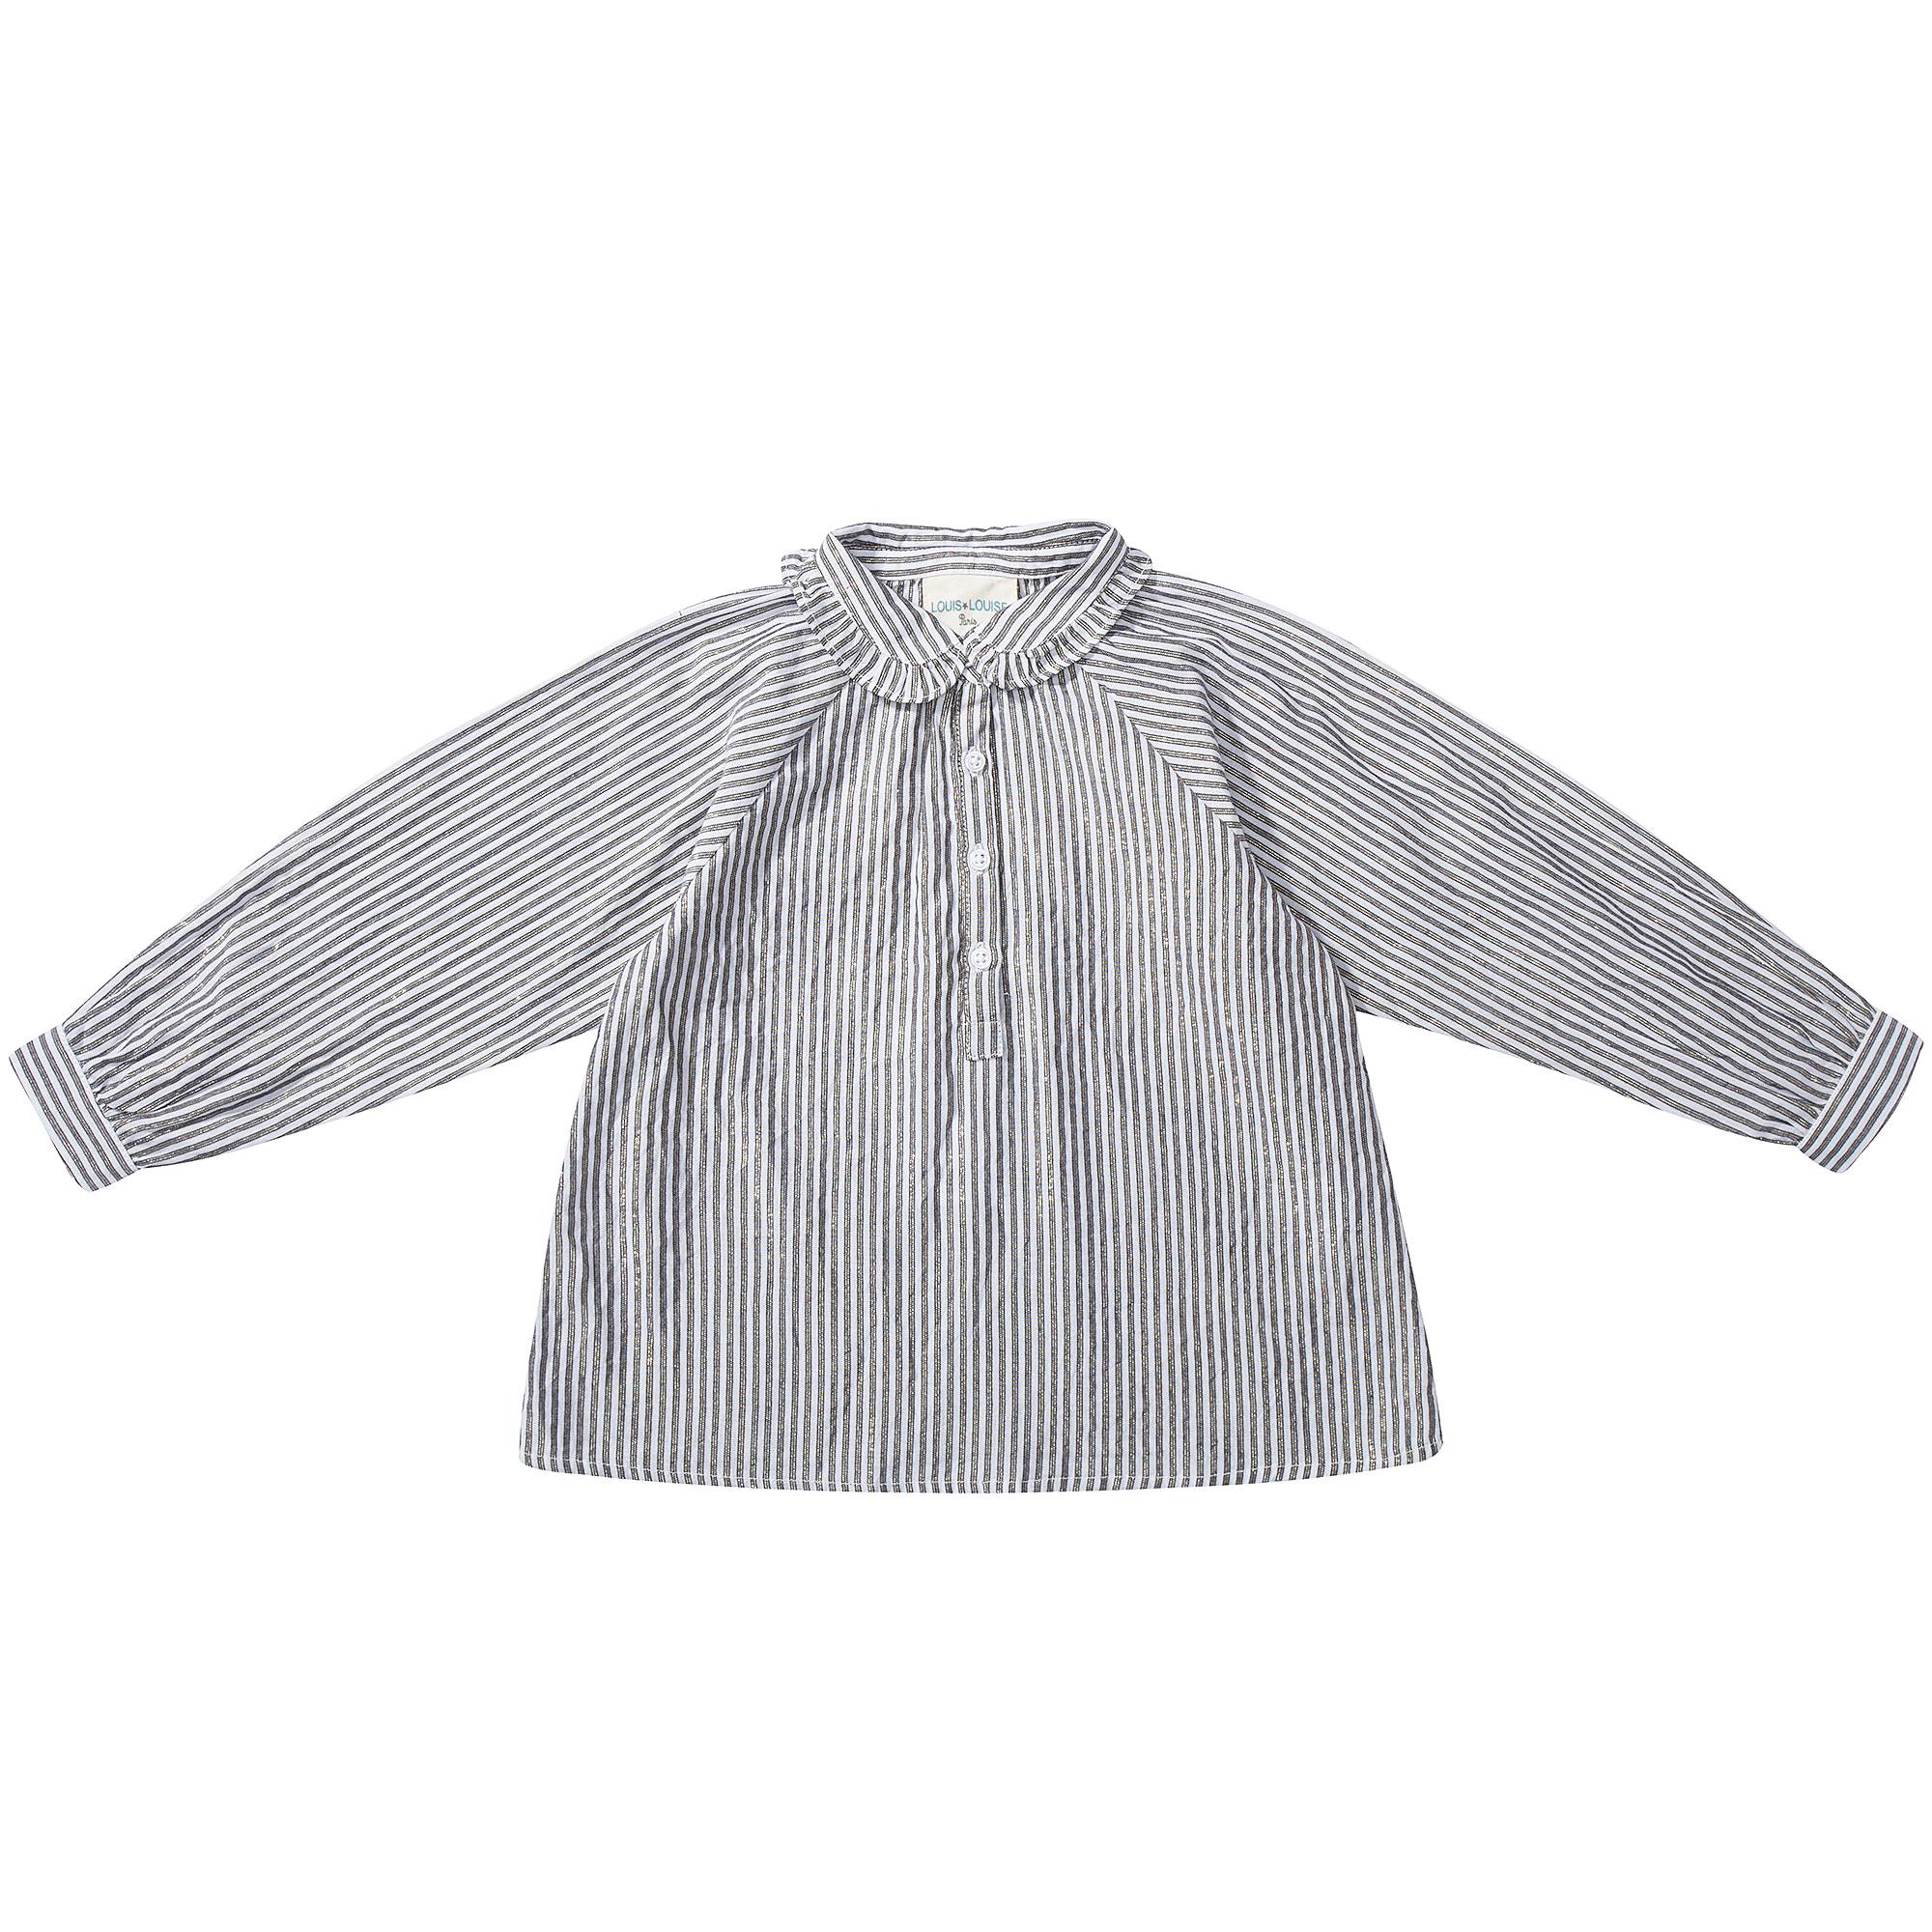 Girls Grey Stripes Cotton Shirt